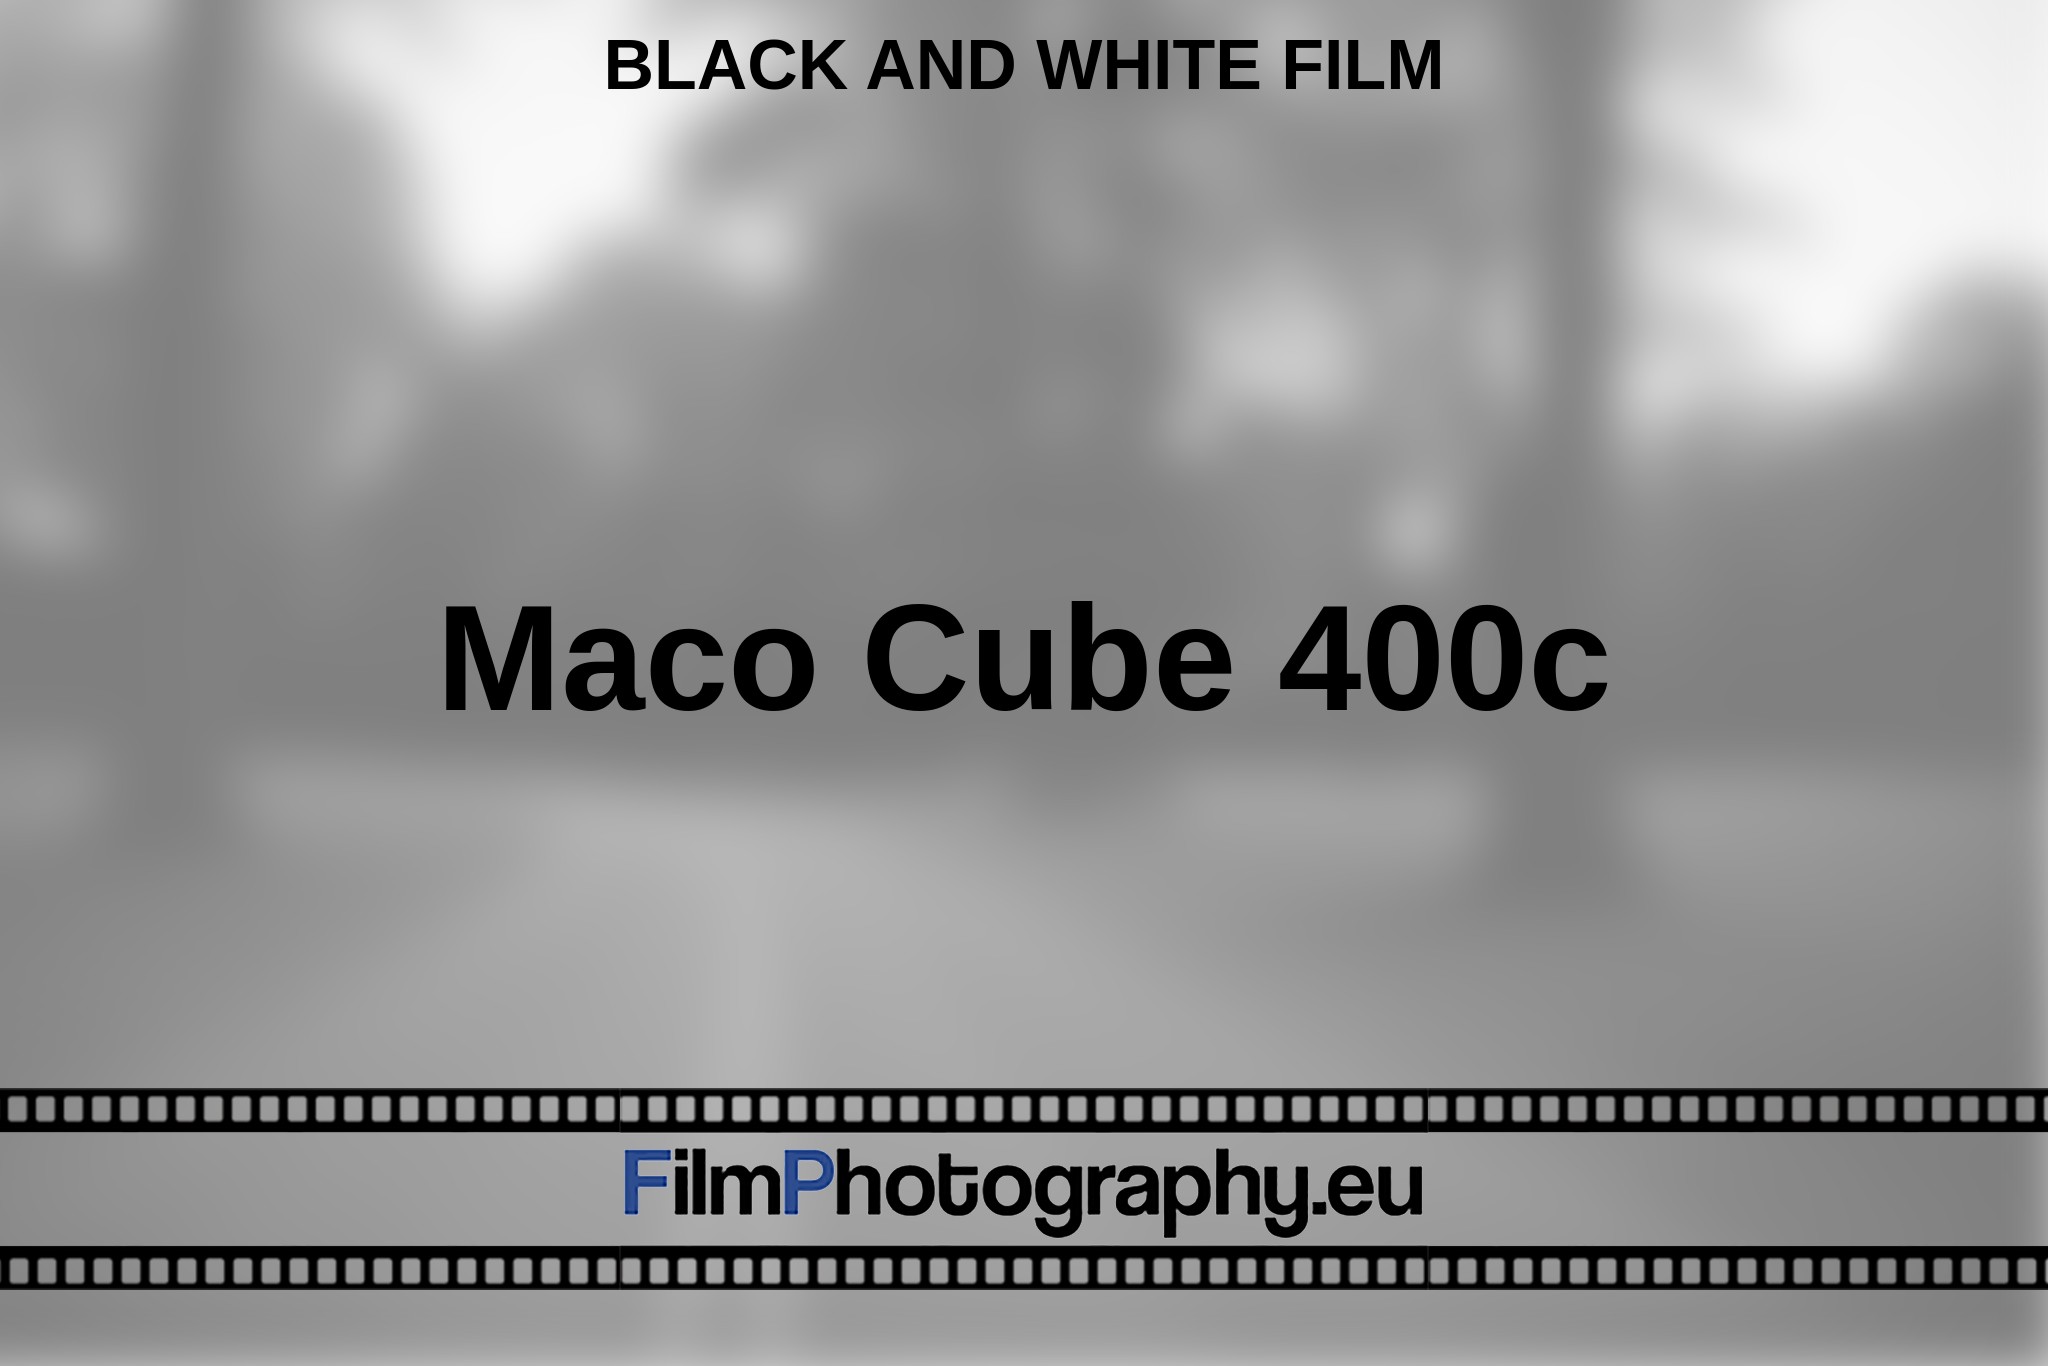 maco-cube-400c-black-and-white-film-en-bnv.jpg